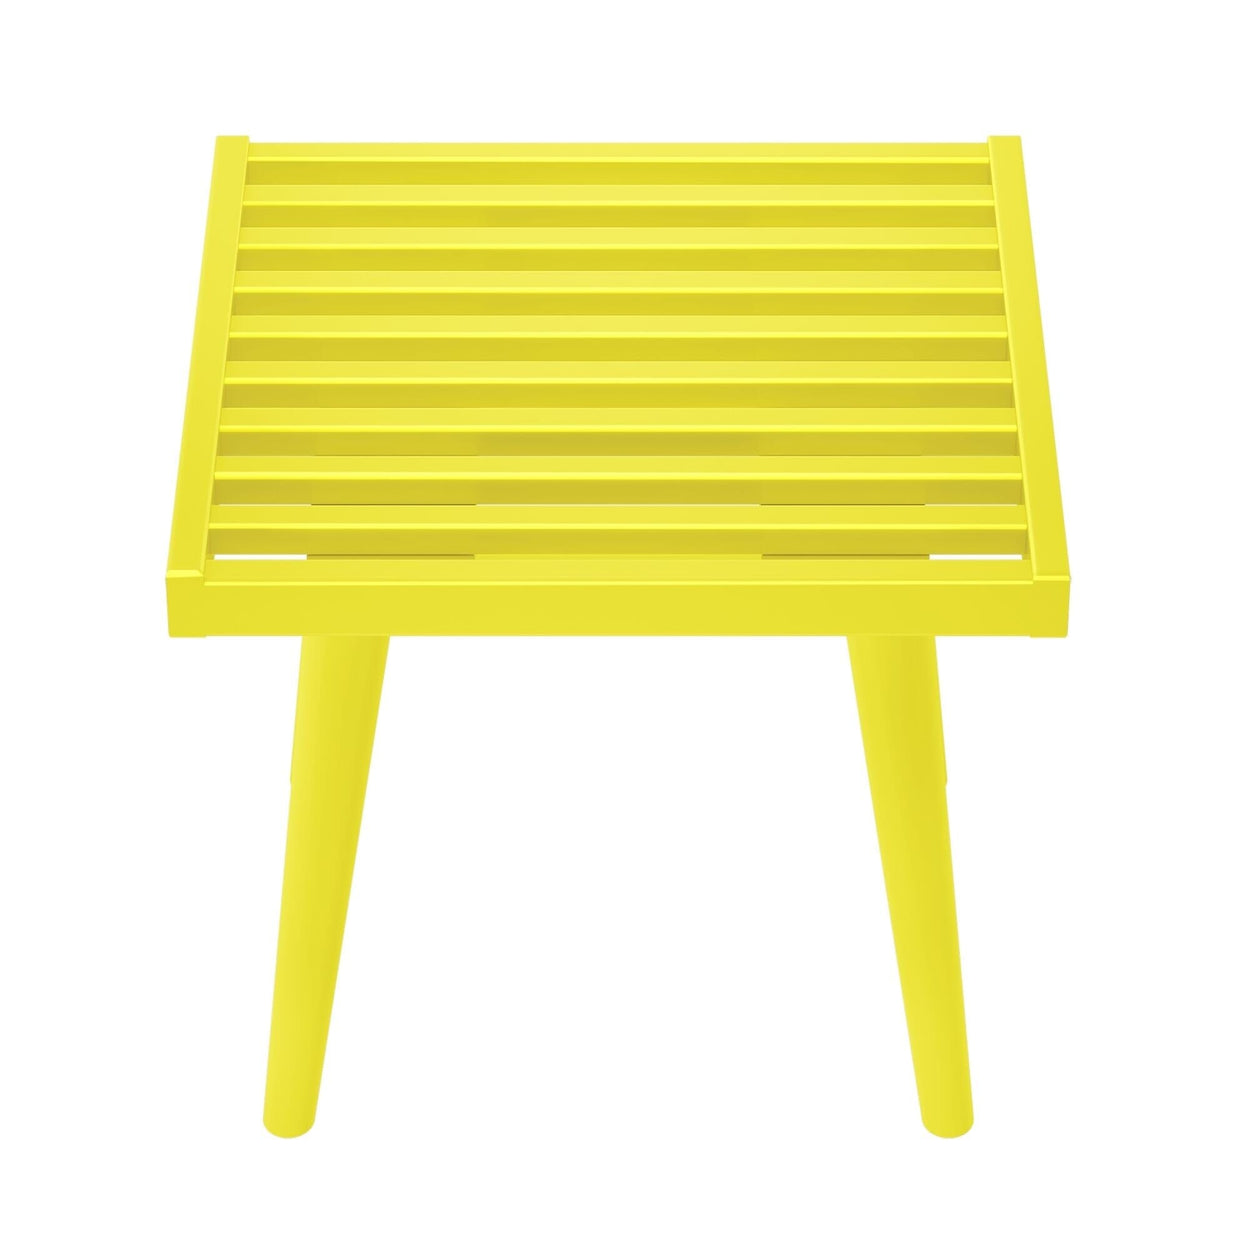 184300-106 : Accessories Mid-Century Modern Single Bench, Yellow